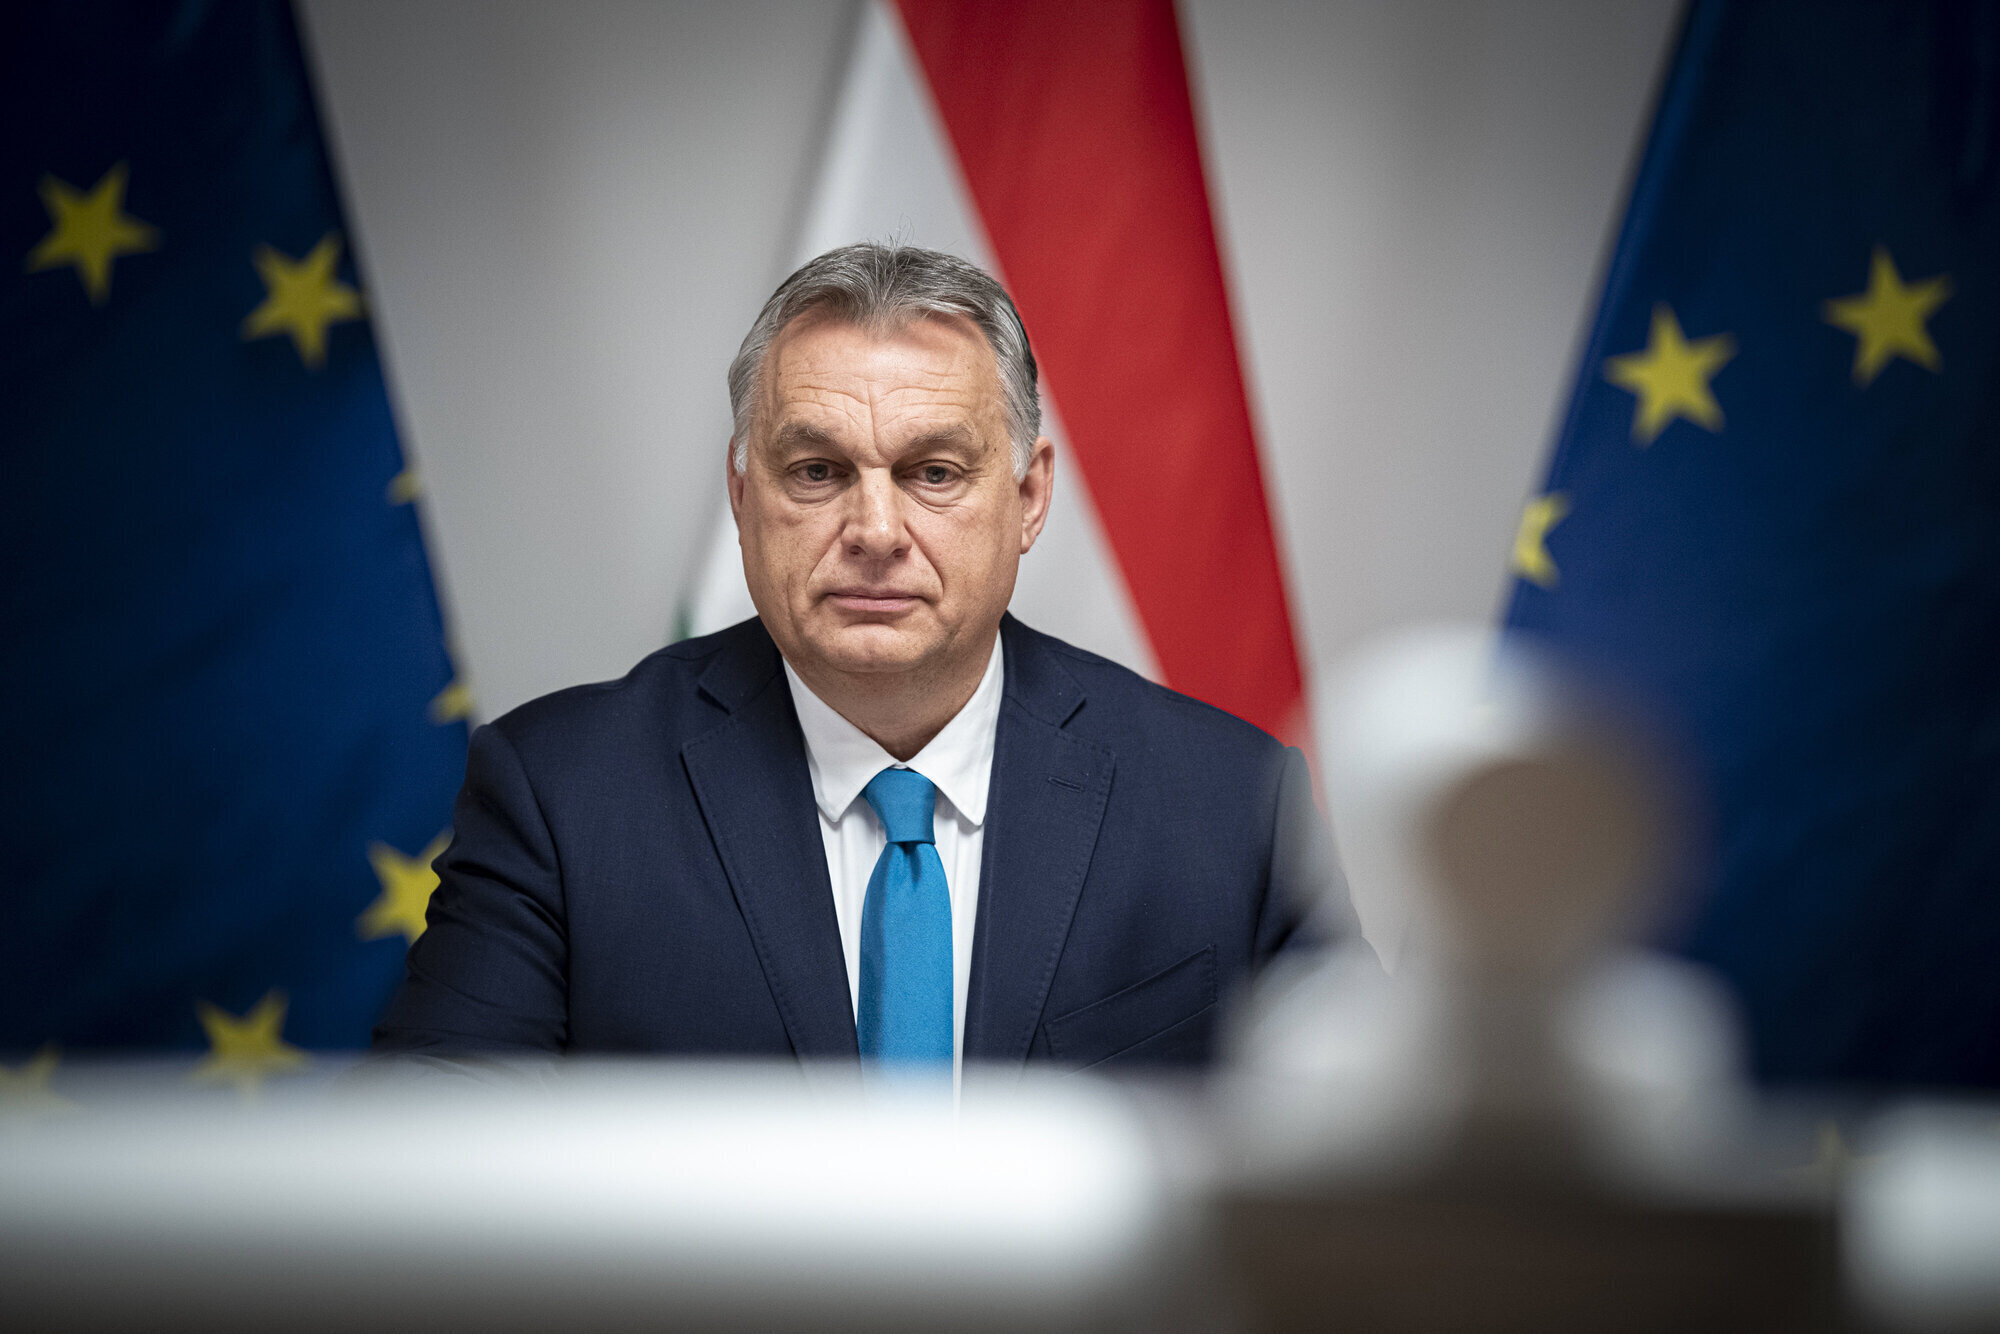 orbán eu summit